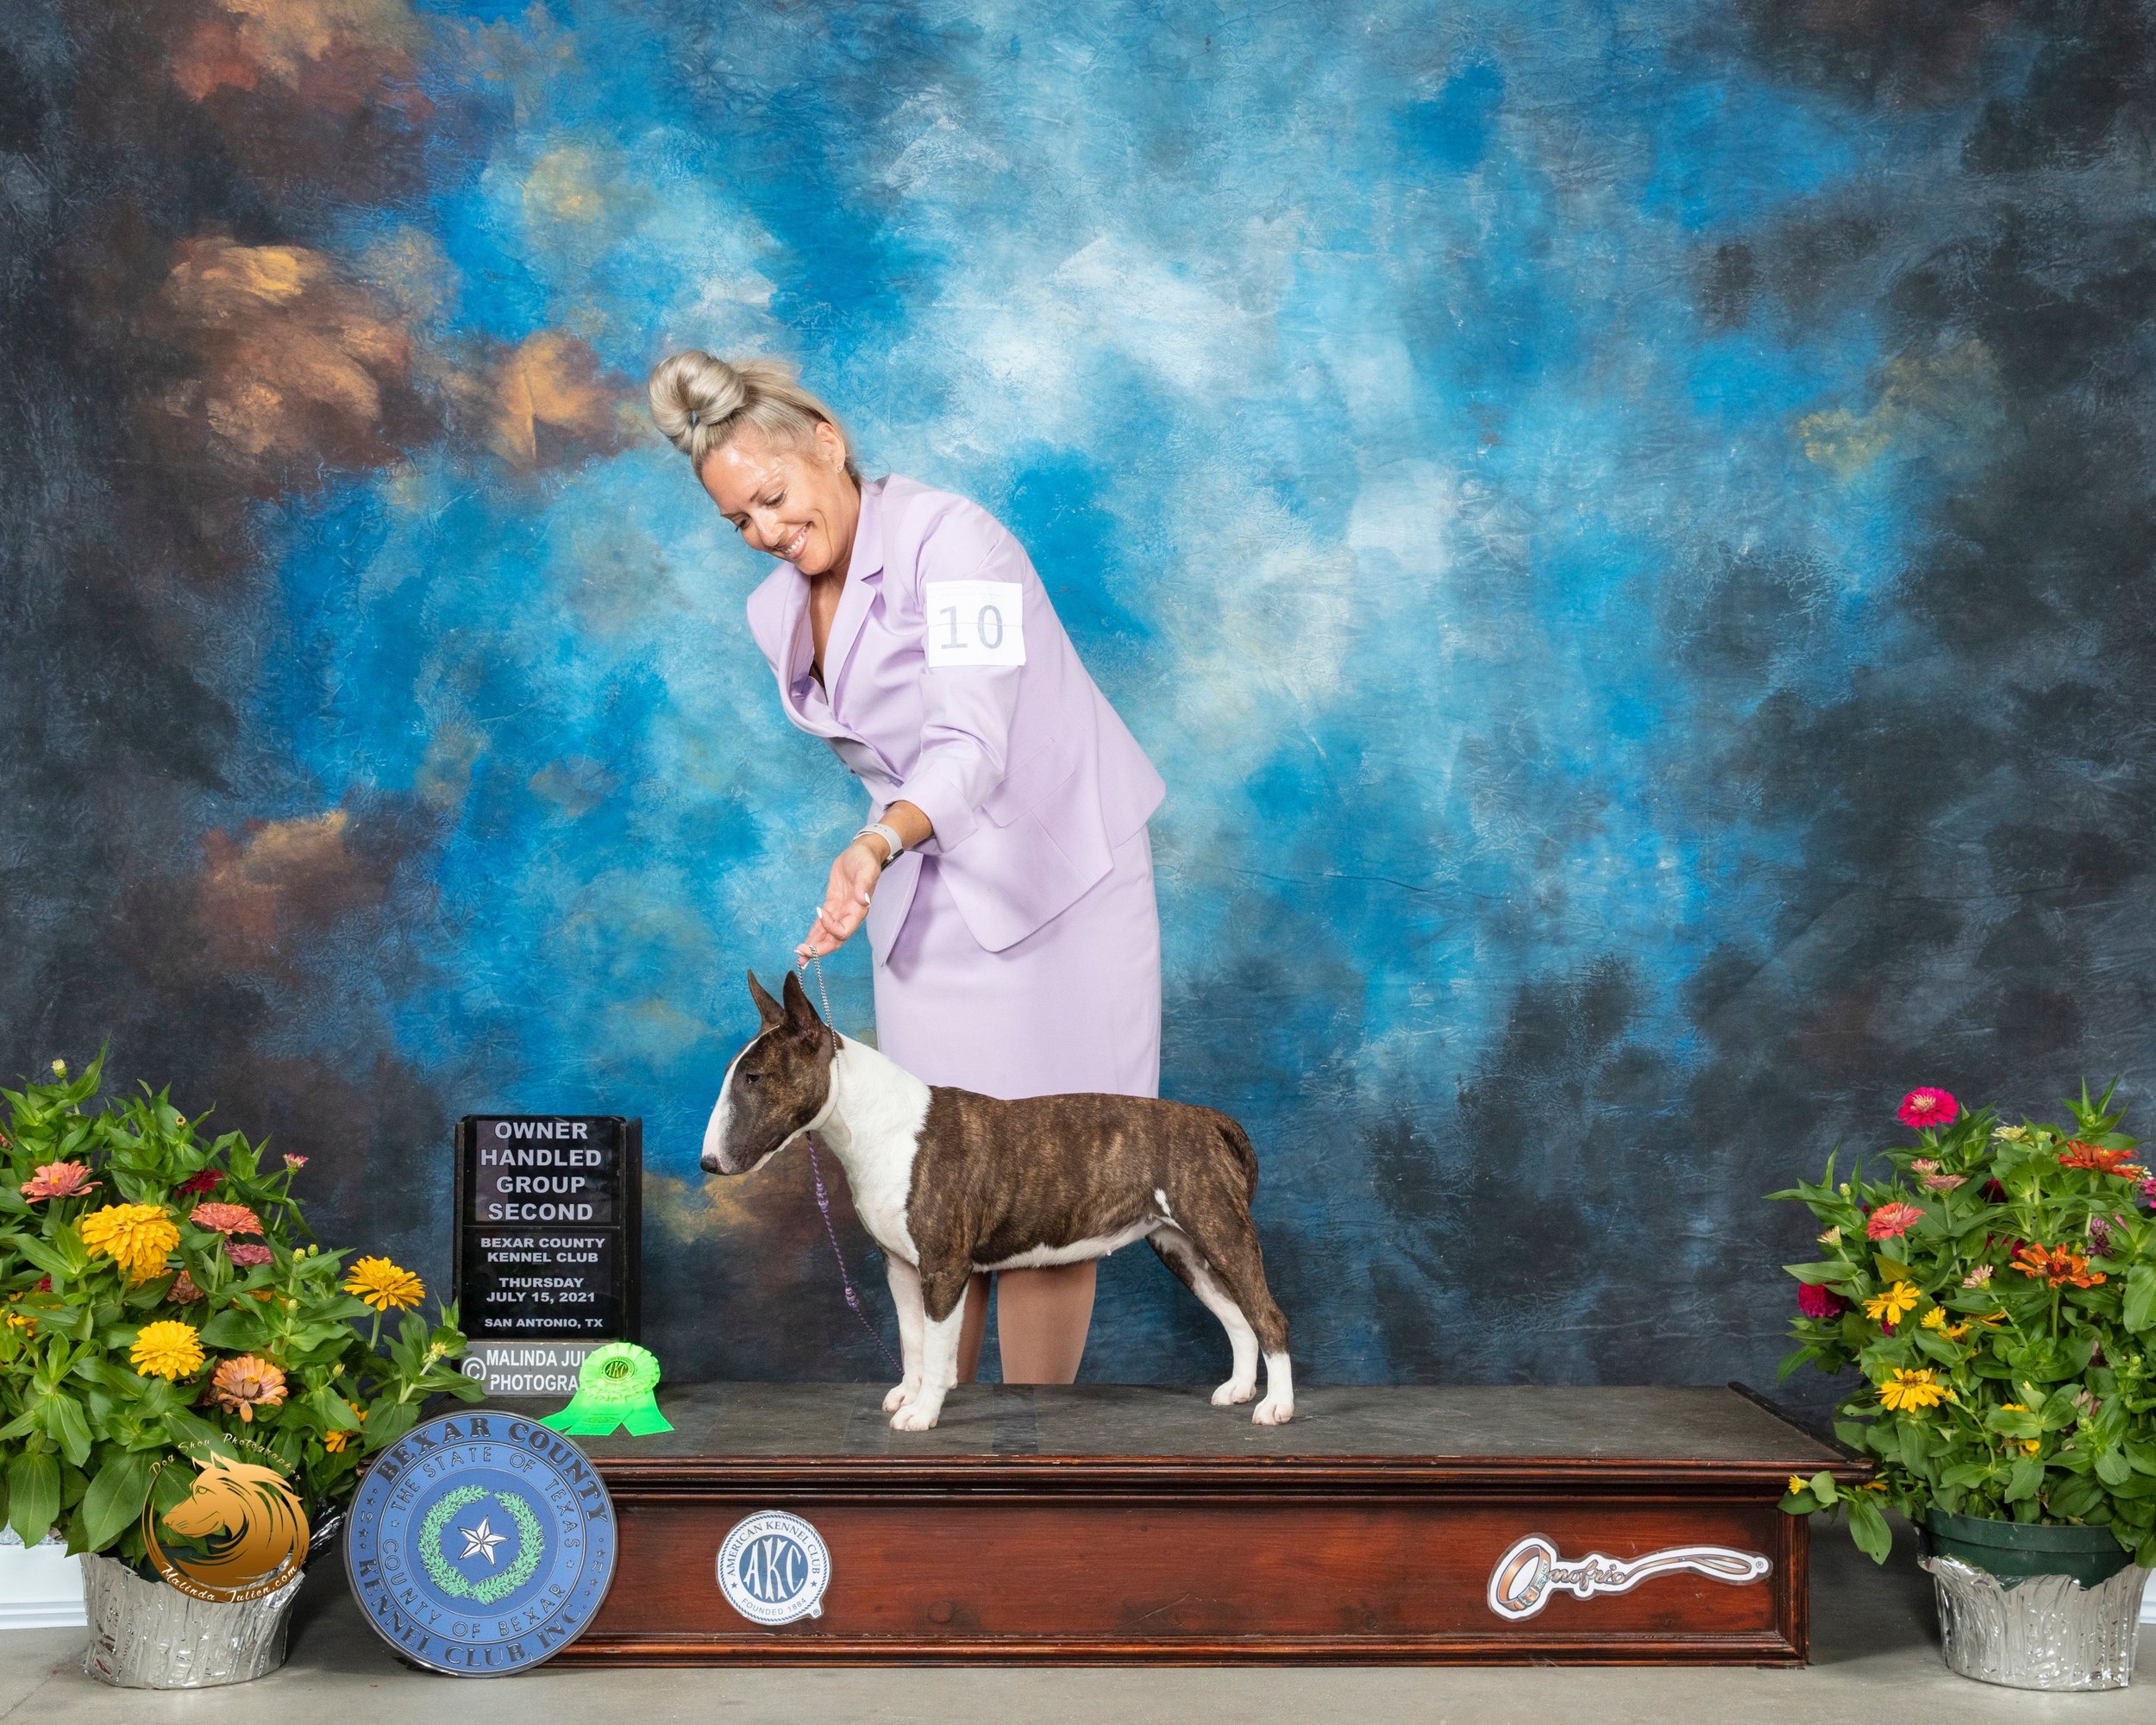 Miniature Bull Terrier #10 Th OHG3 Judge Robert Hutton_MMJ_0376_SanAnonio2021_HR3.jpeg